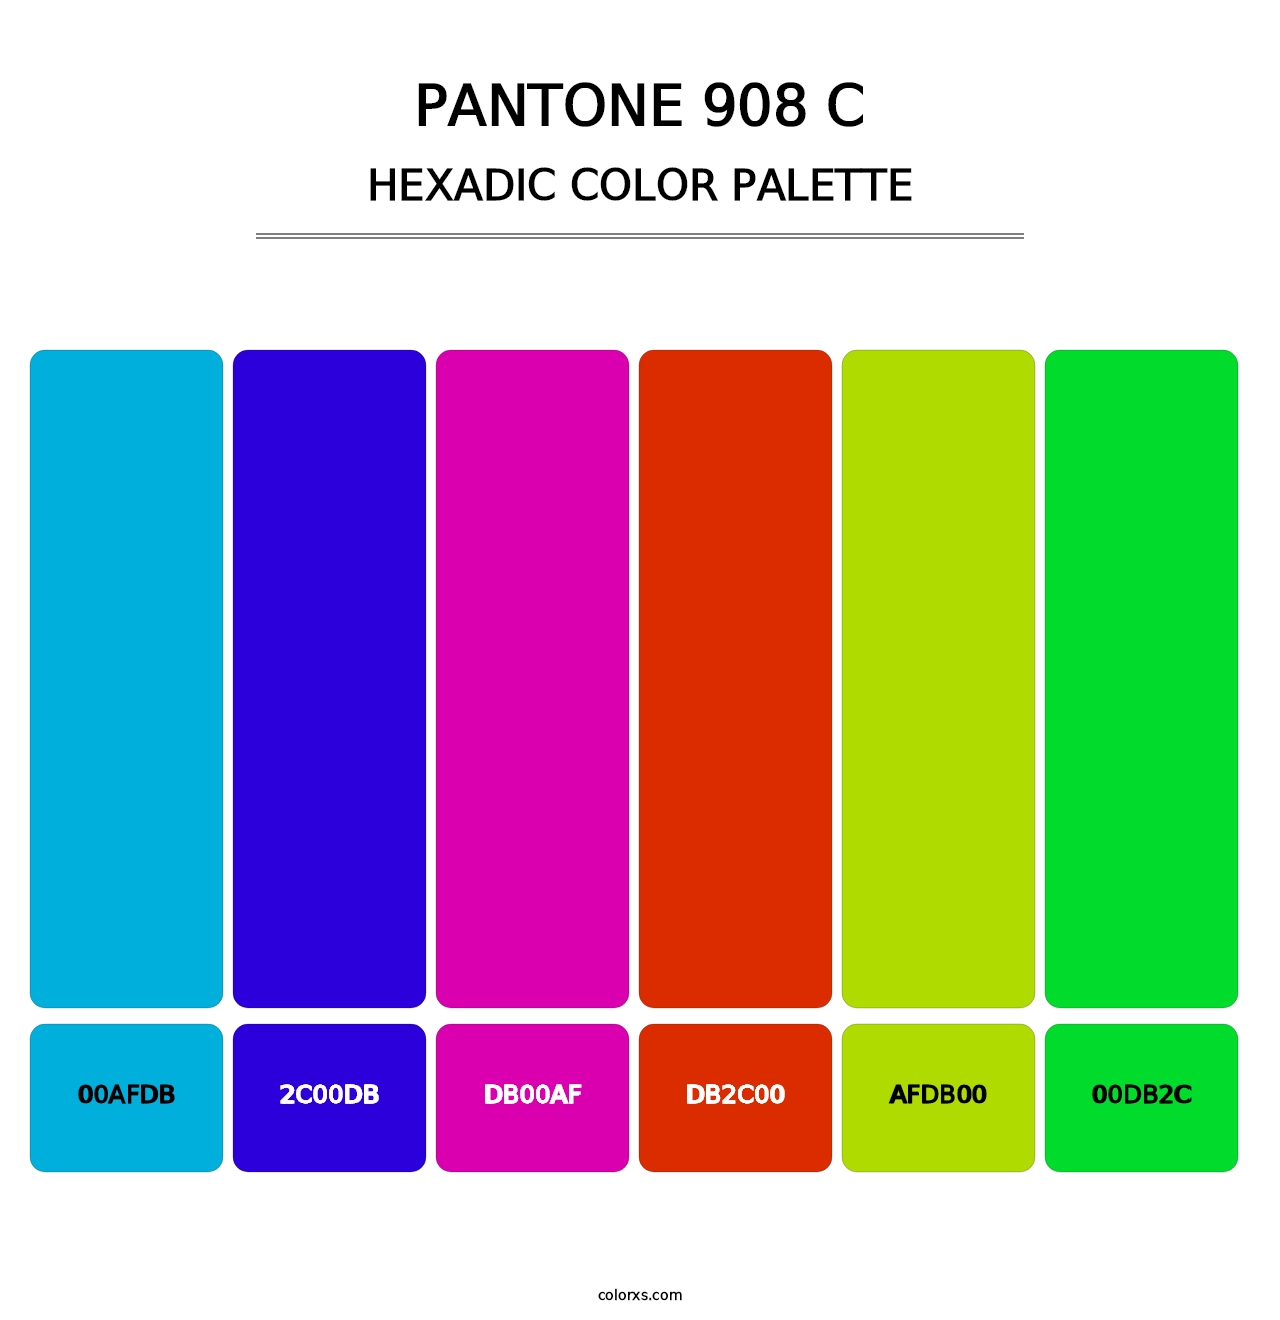 PANTONE 908 C - Hexadic Color Palette